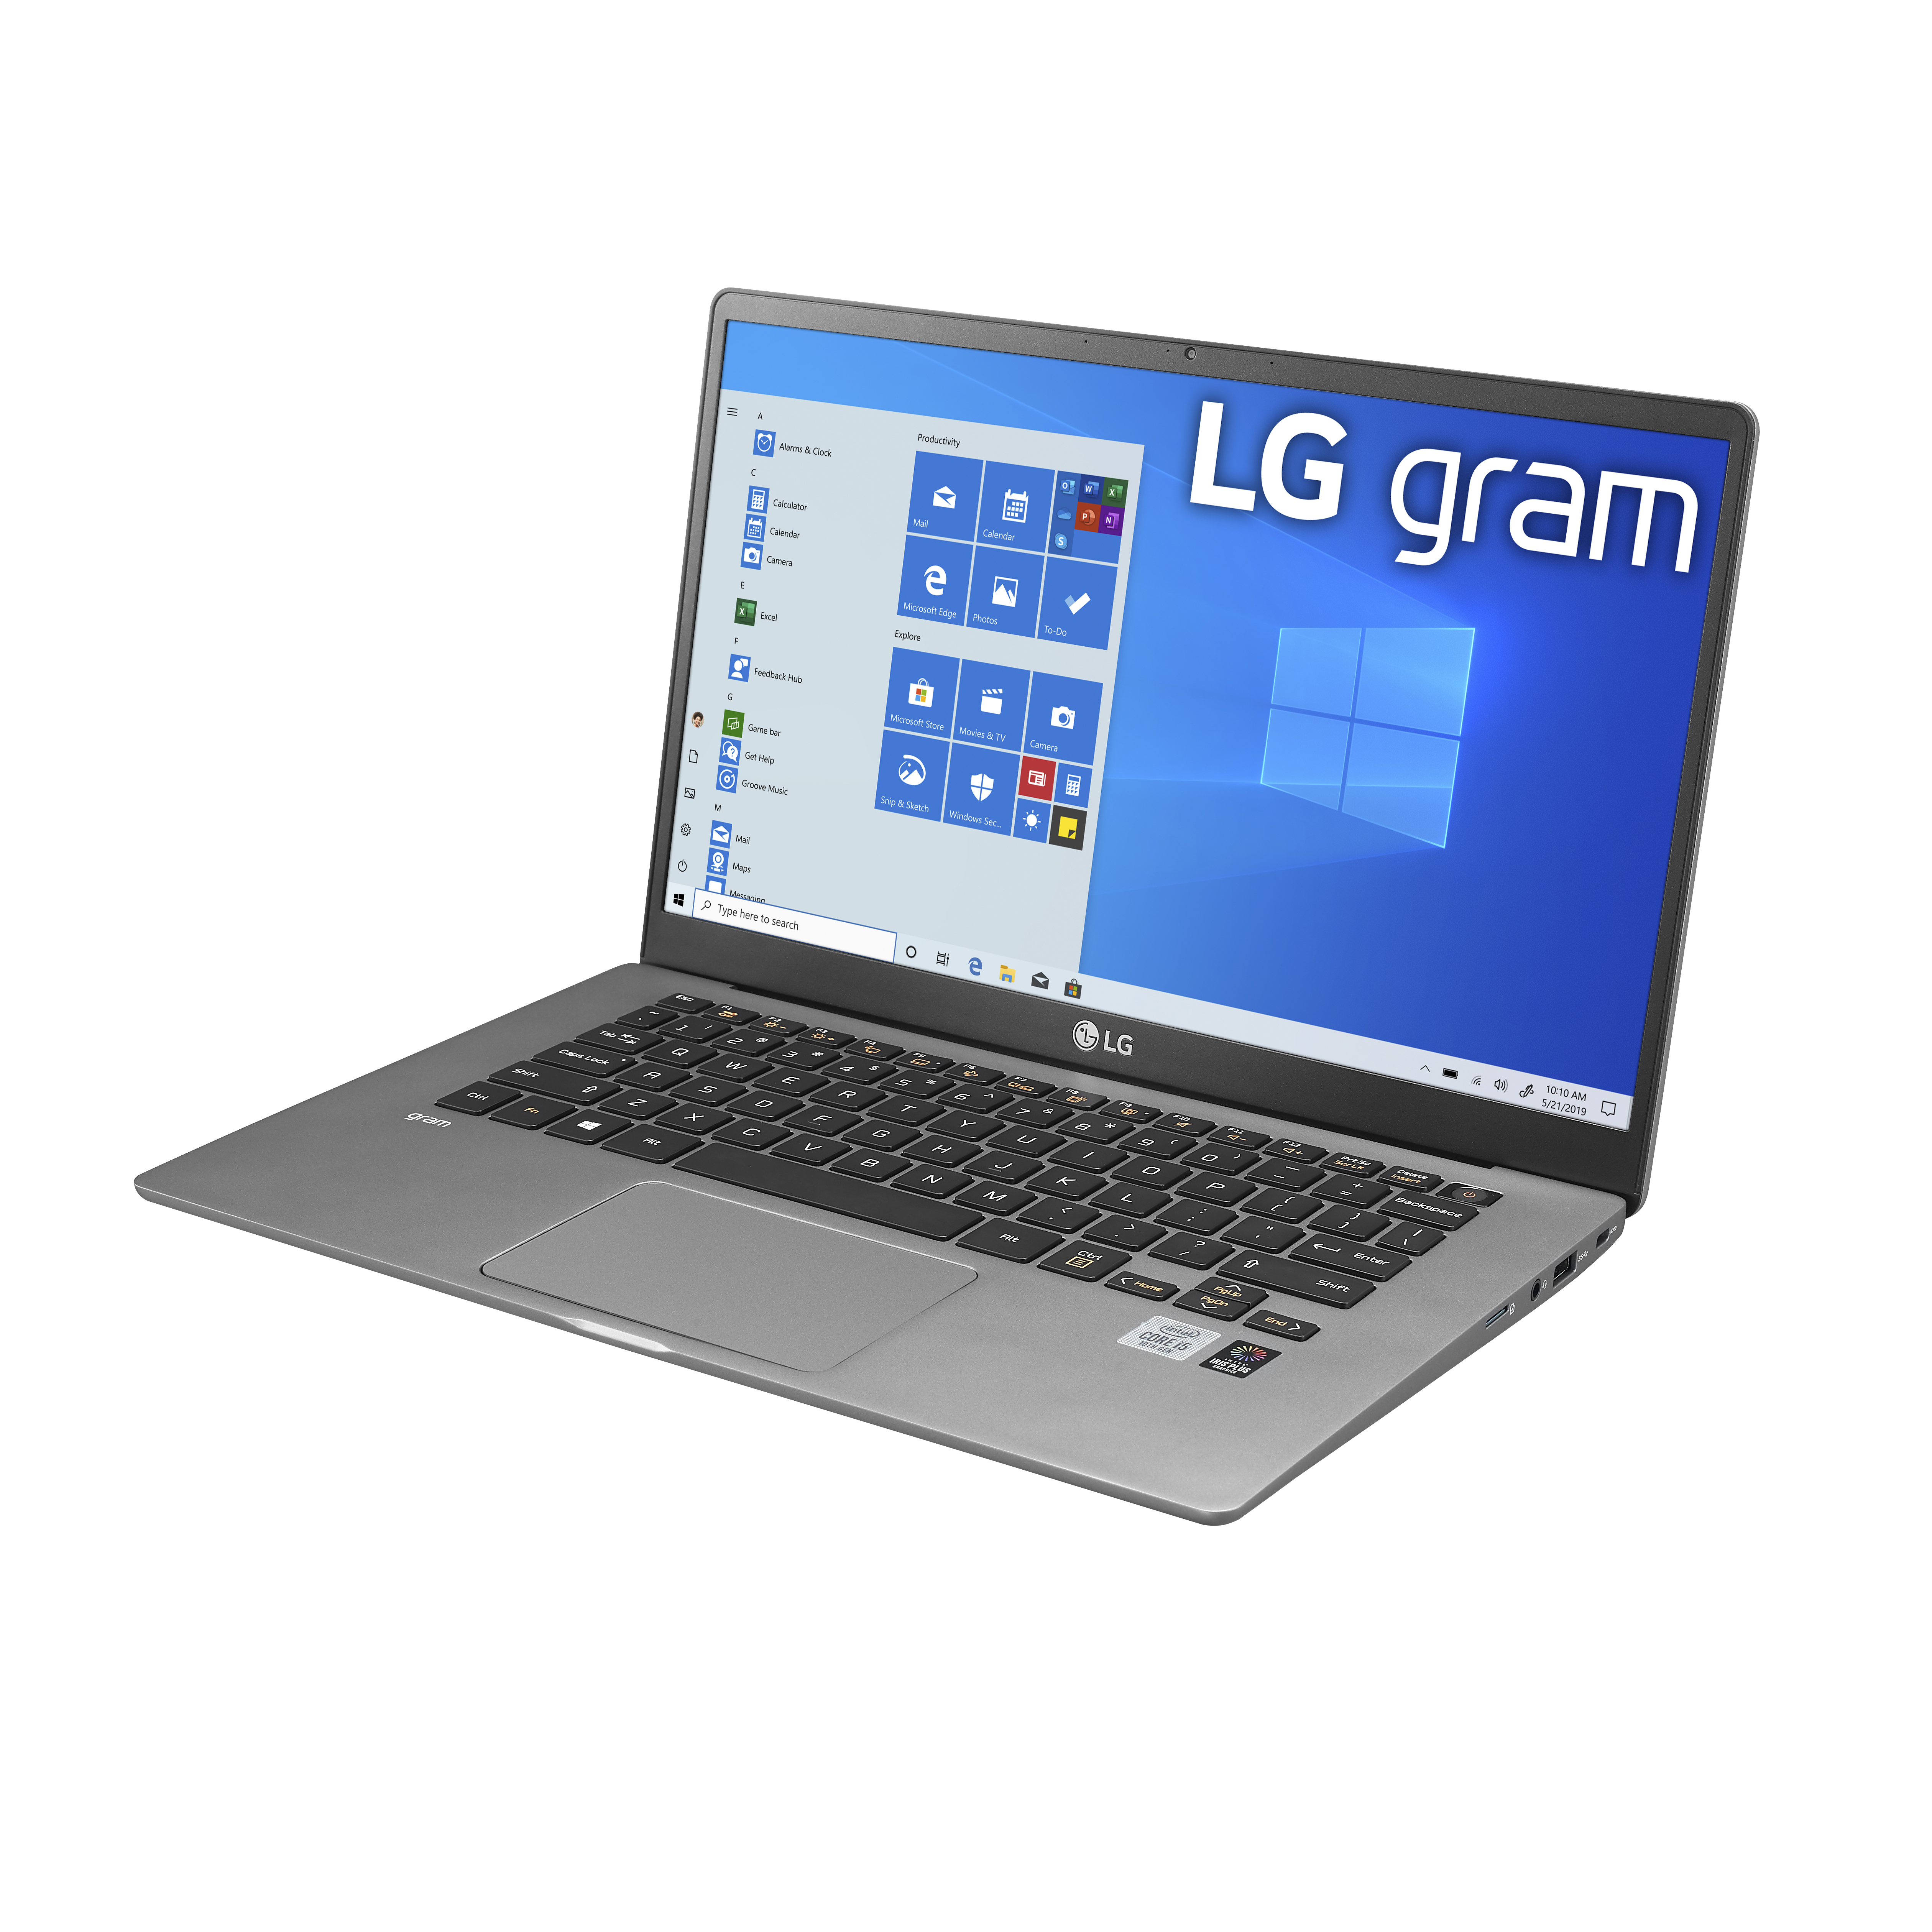 LG gram 14 inch Ultra-Lightweight Laptop with 10th Gen Intel Core Processor w/Intel Iris Plus - 14Z90N-U.AAS7U1 - image 5 of 13